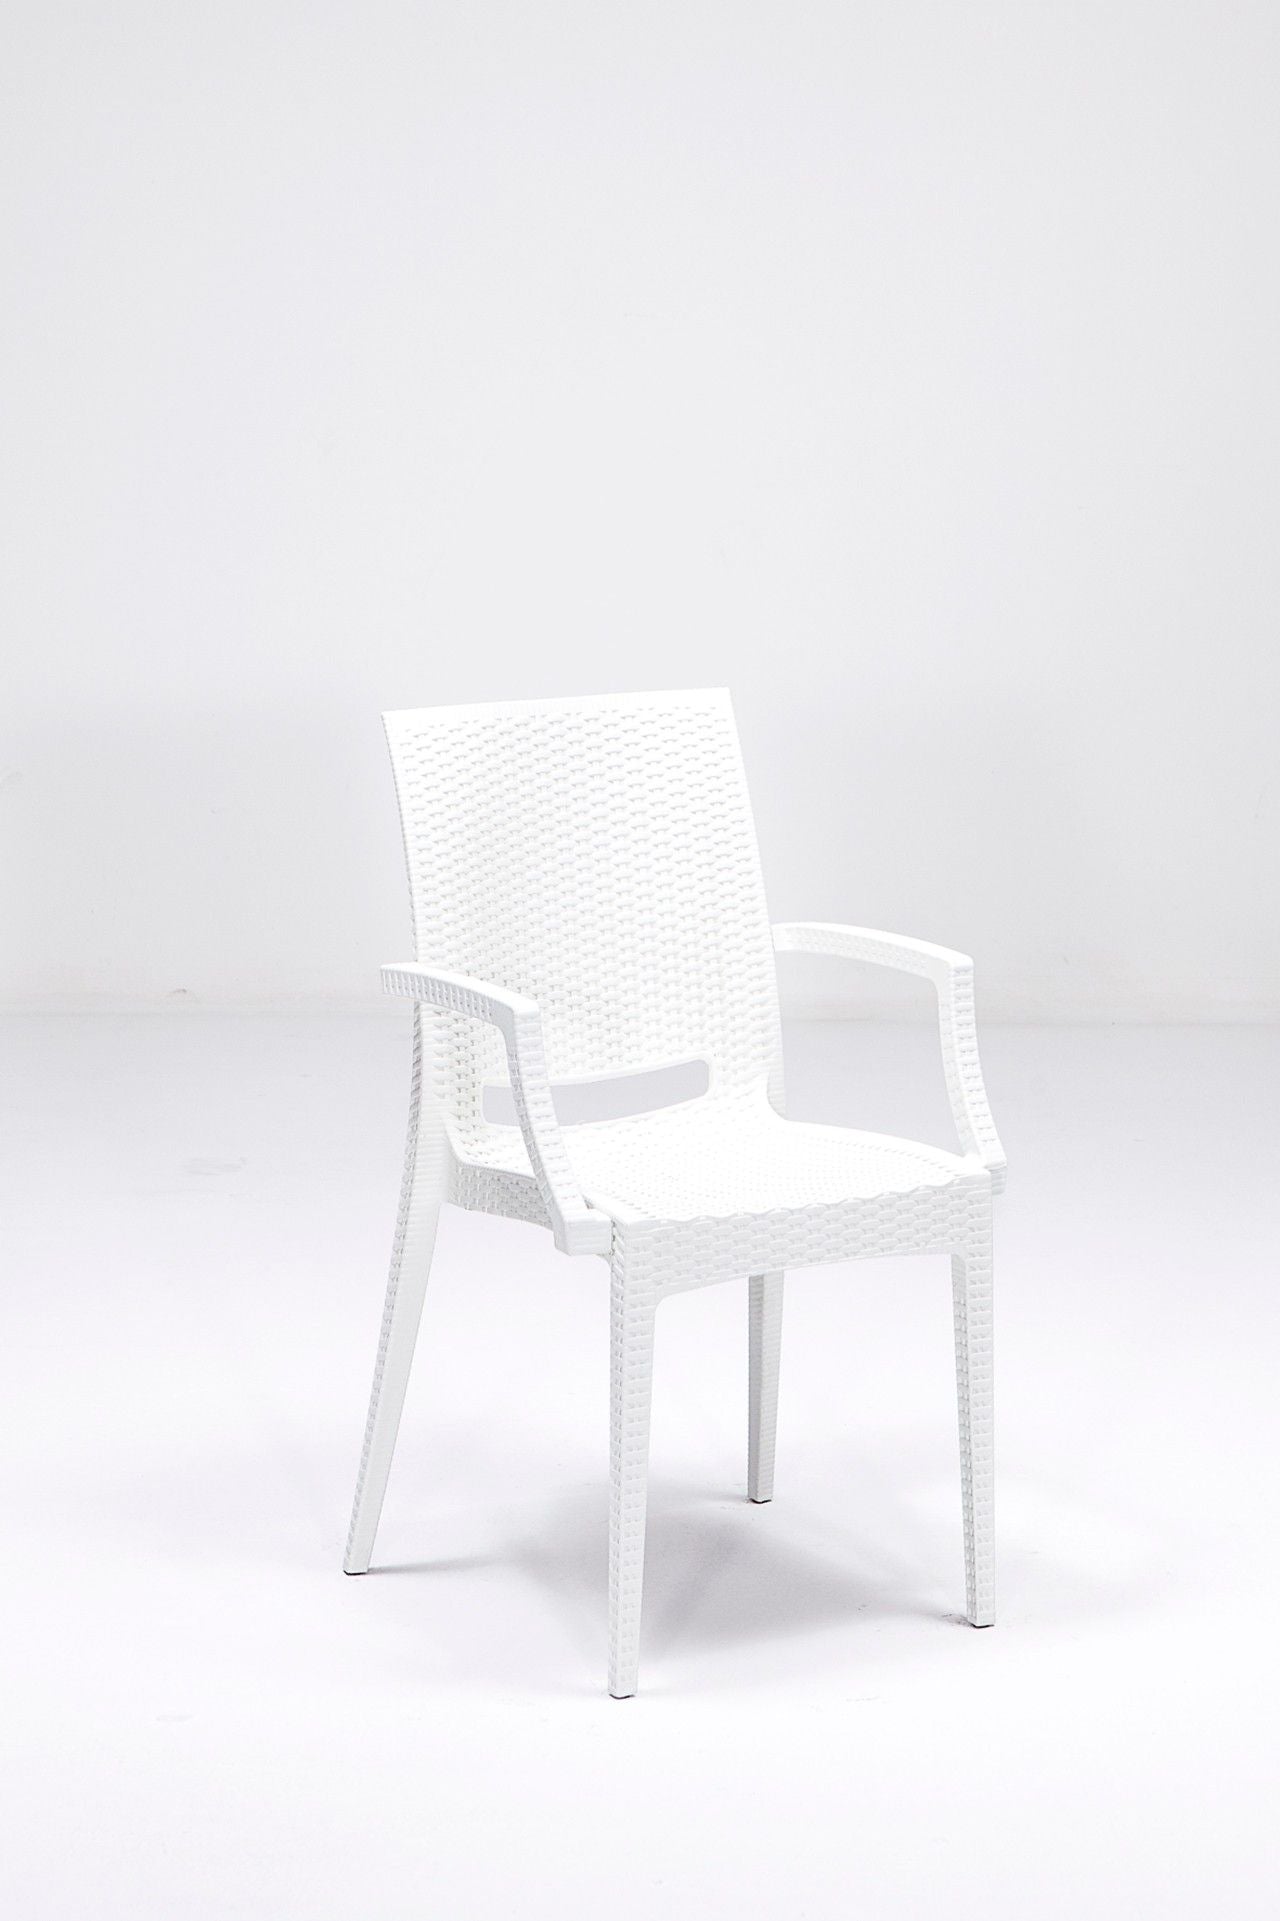 Rattan 80x80 Small Lux Masa Takimi - White - Garden Table & Chairs Set (5 Pieces)